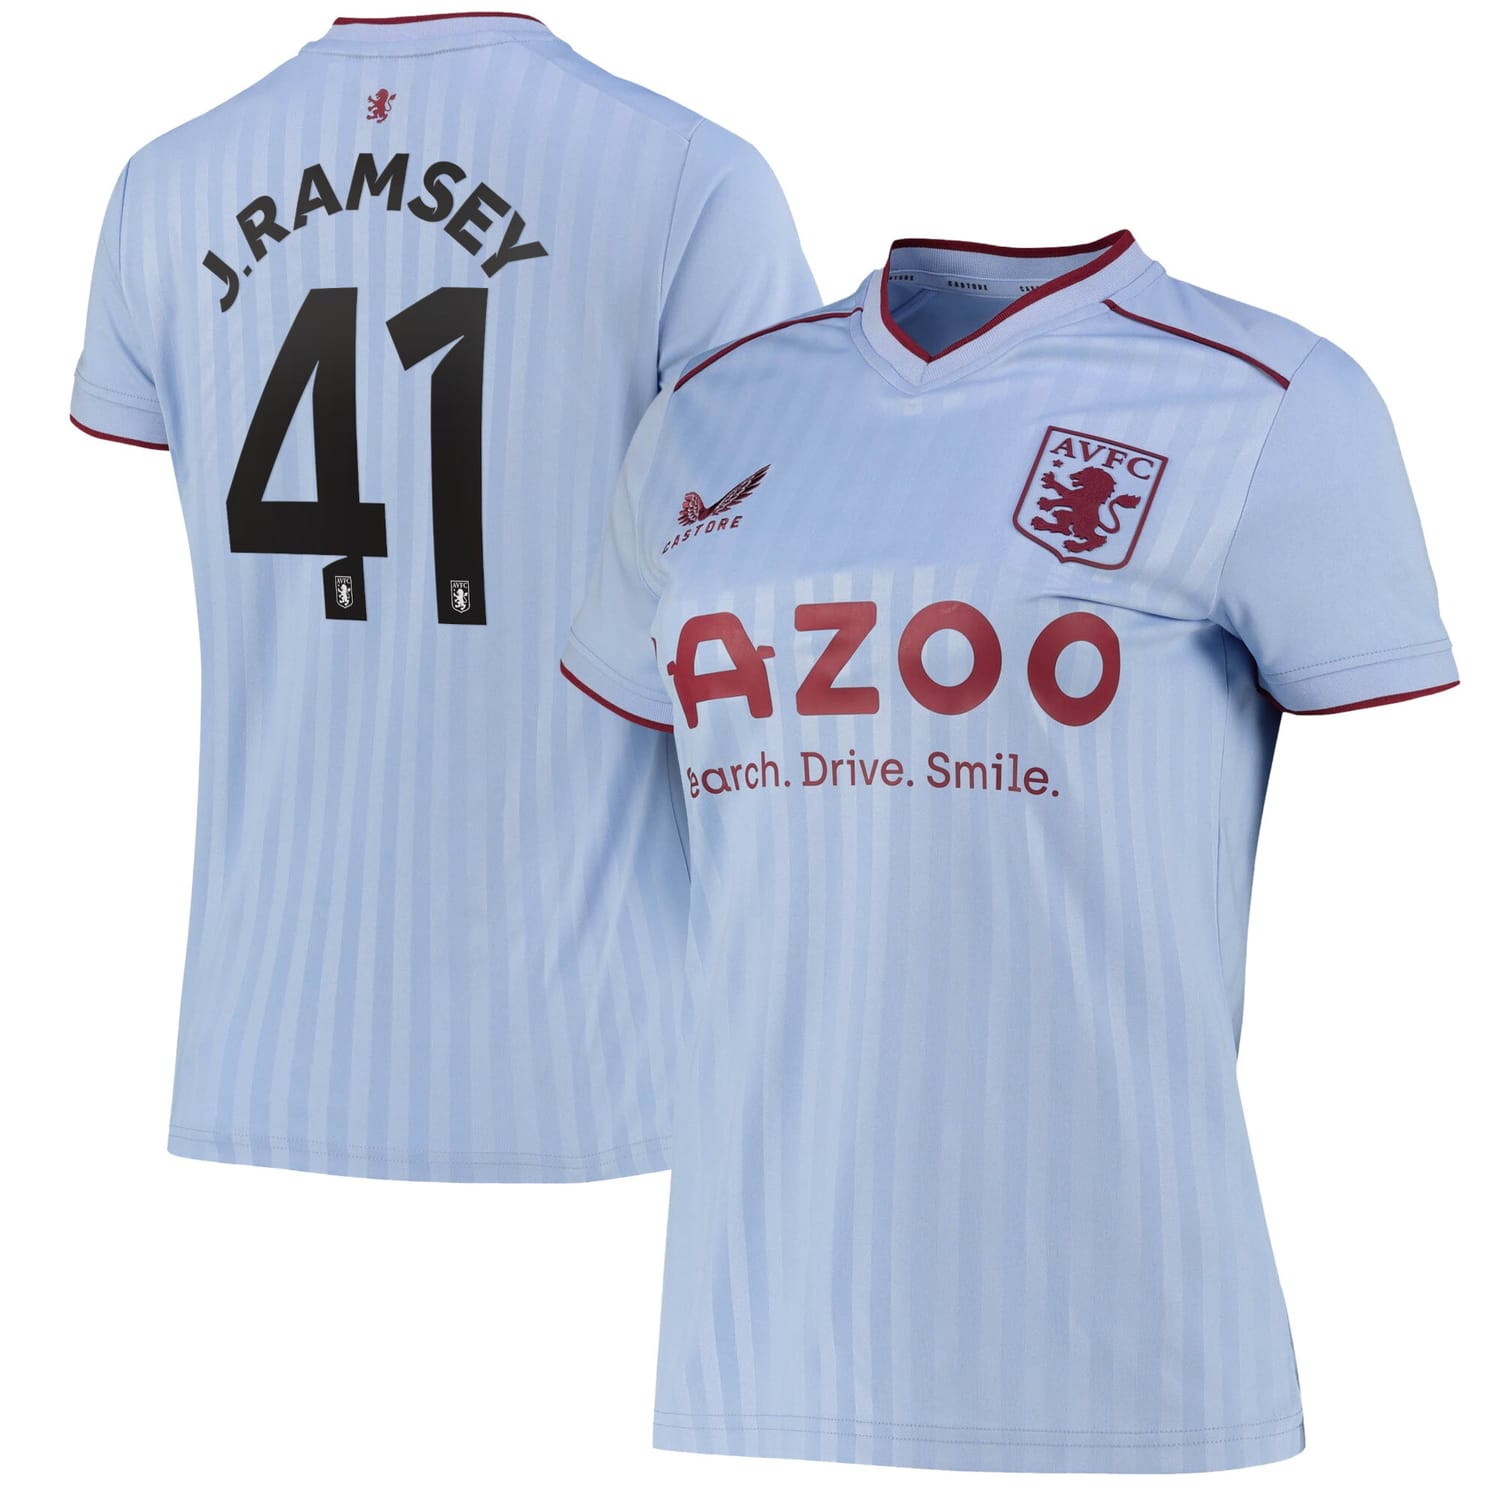 Premier League Aston Villa Away Cup Jersey Shirt 2022-23 player Jacob Ramsey 41 printing for Women